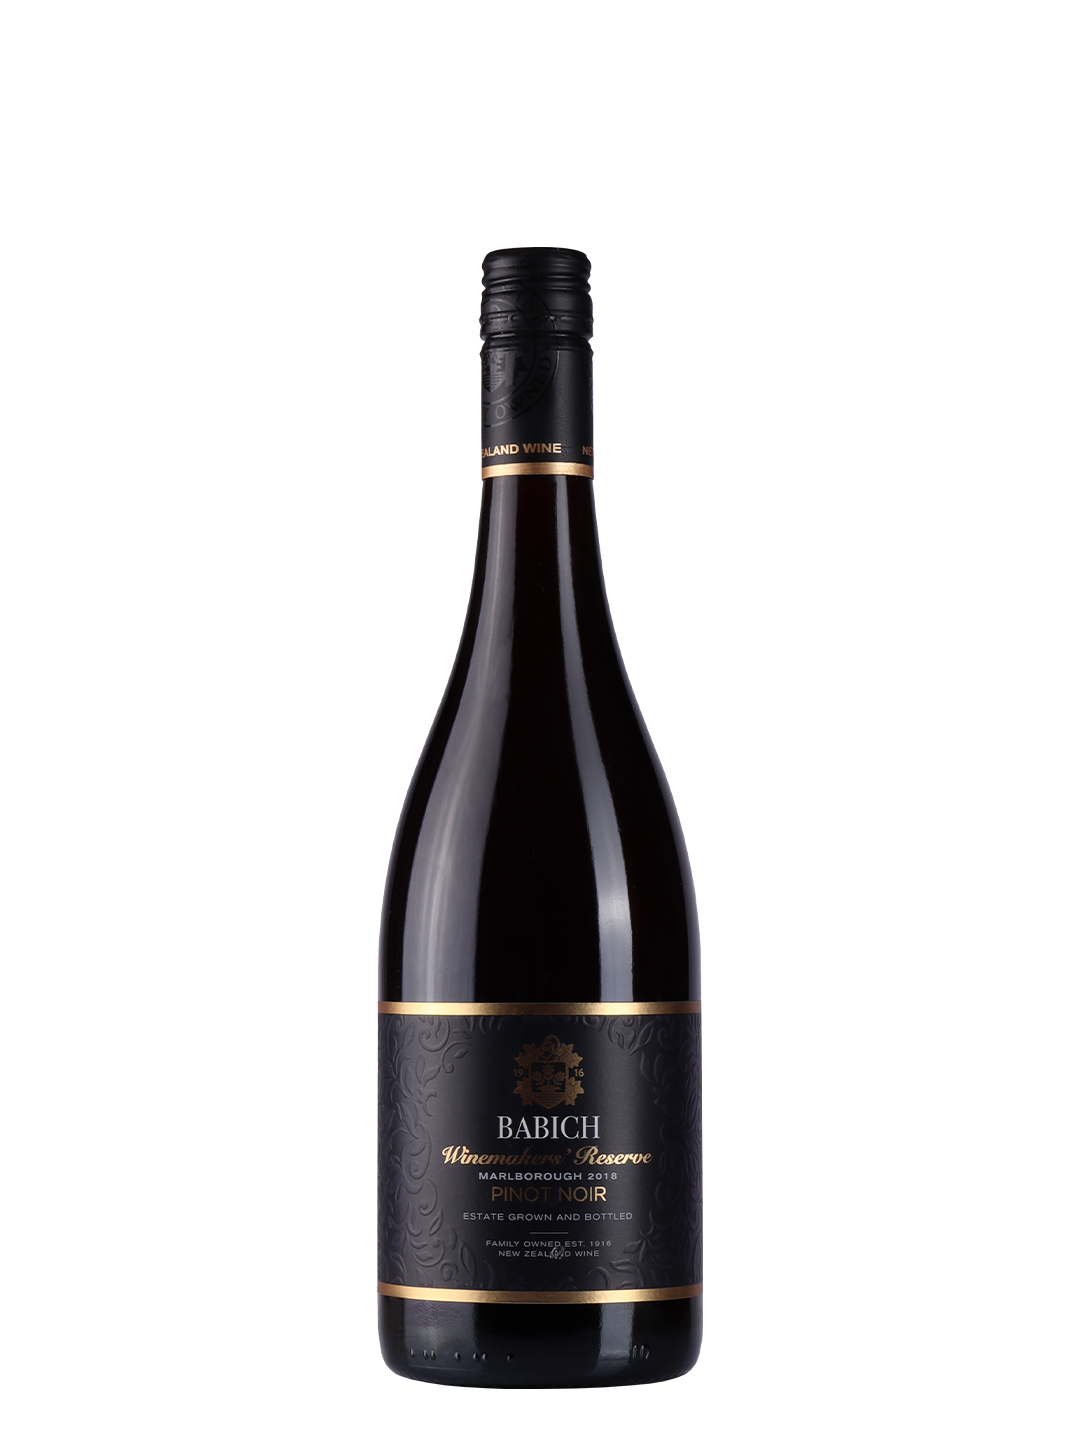 Babich Winemakers Reserve Marlborough Pinot Noir 